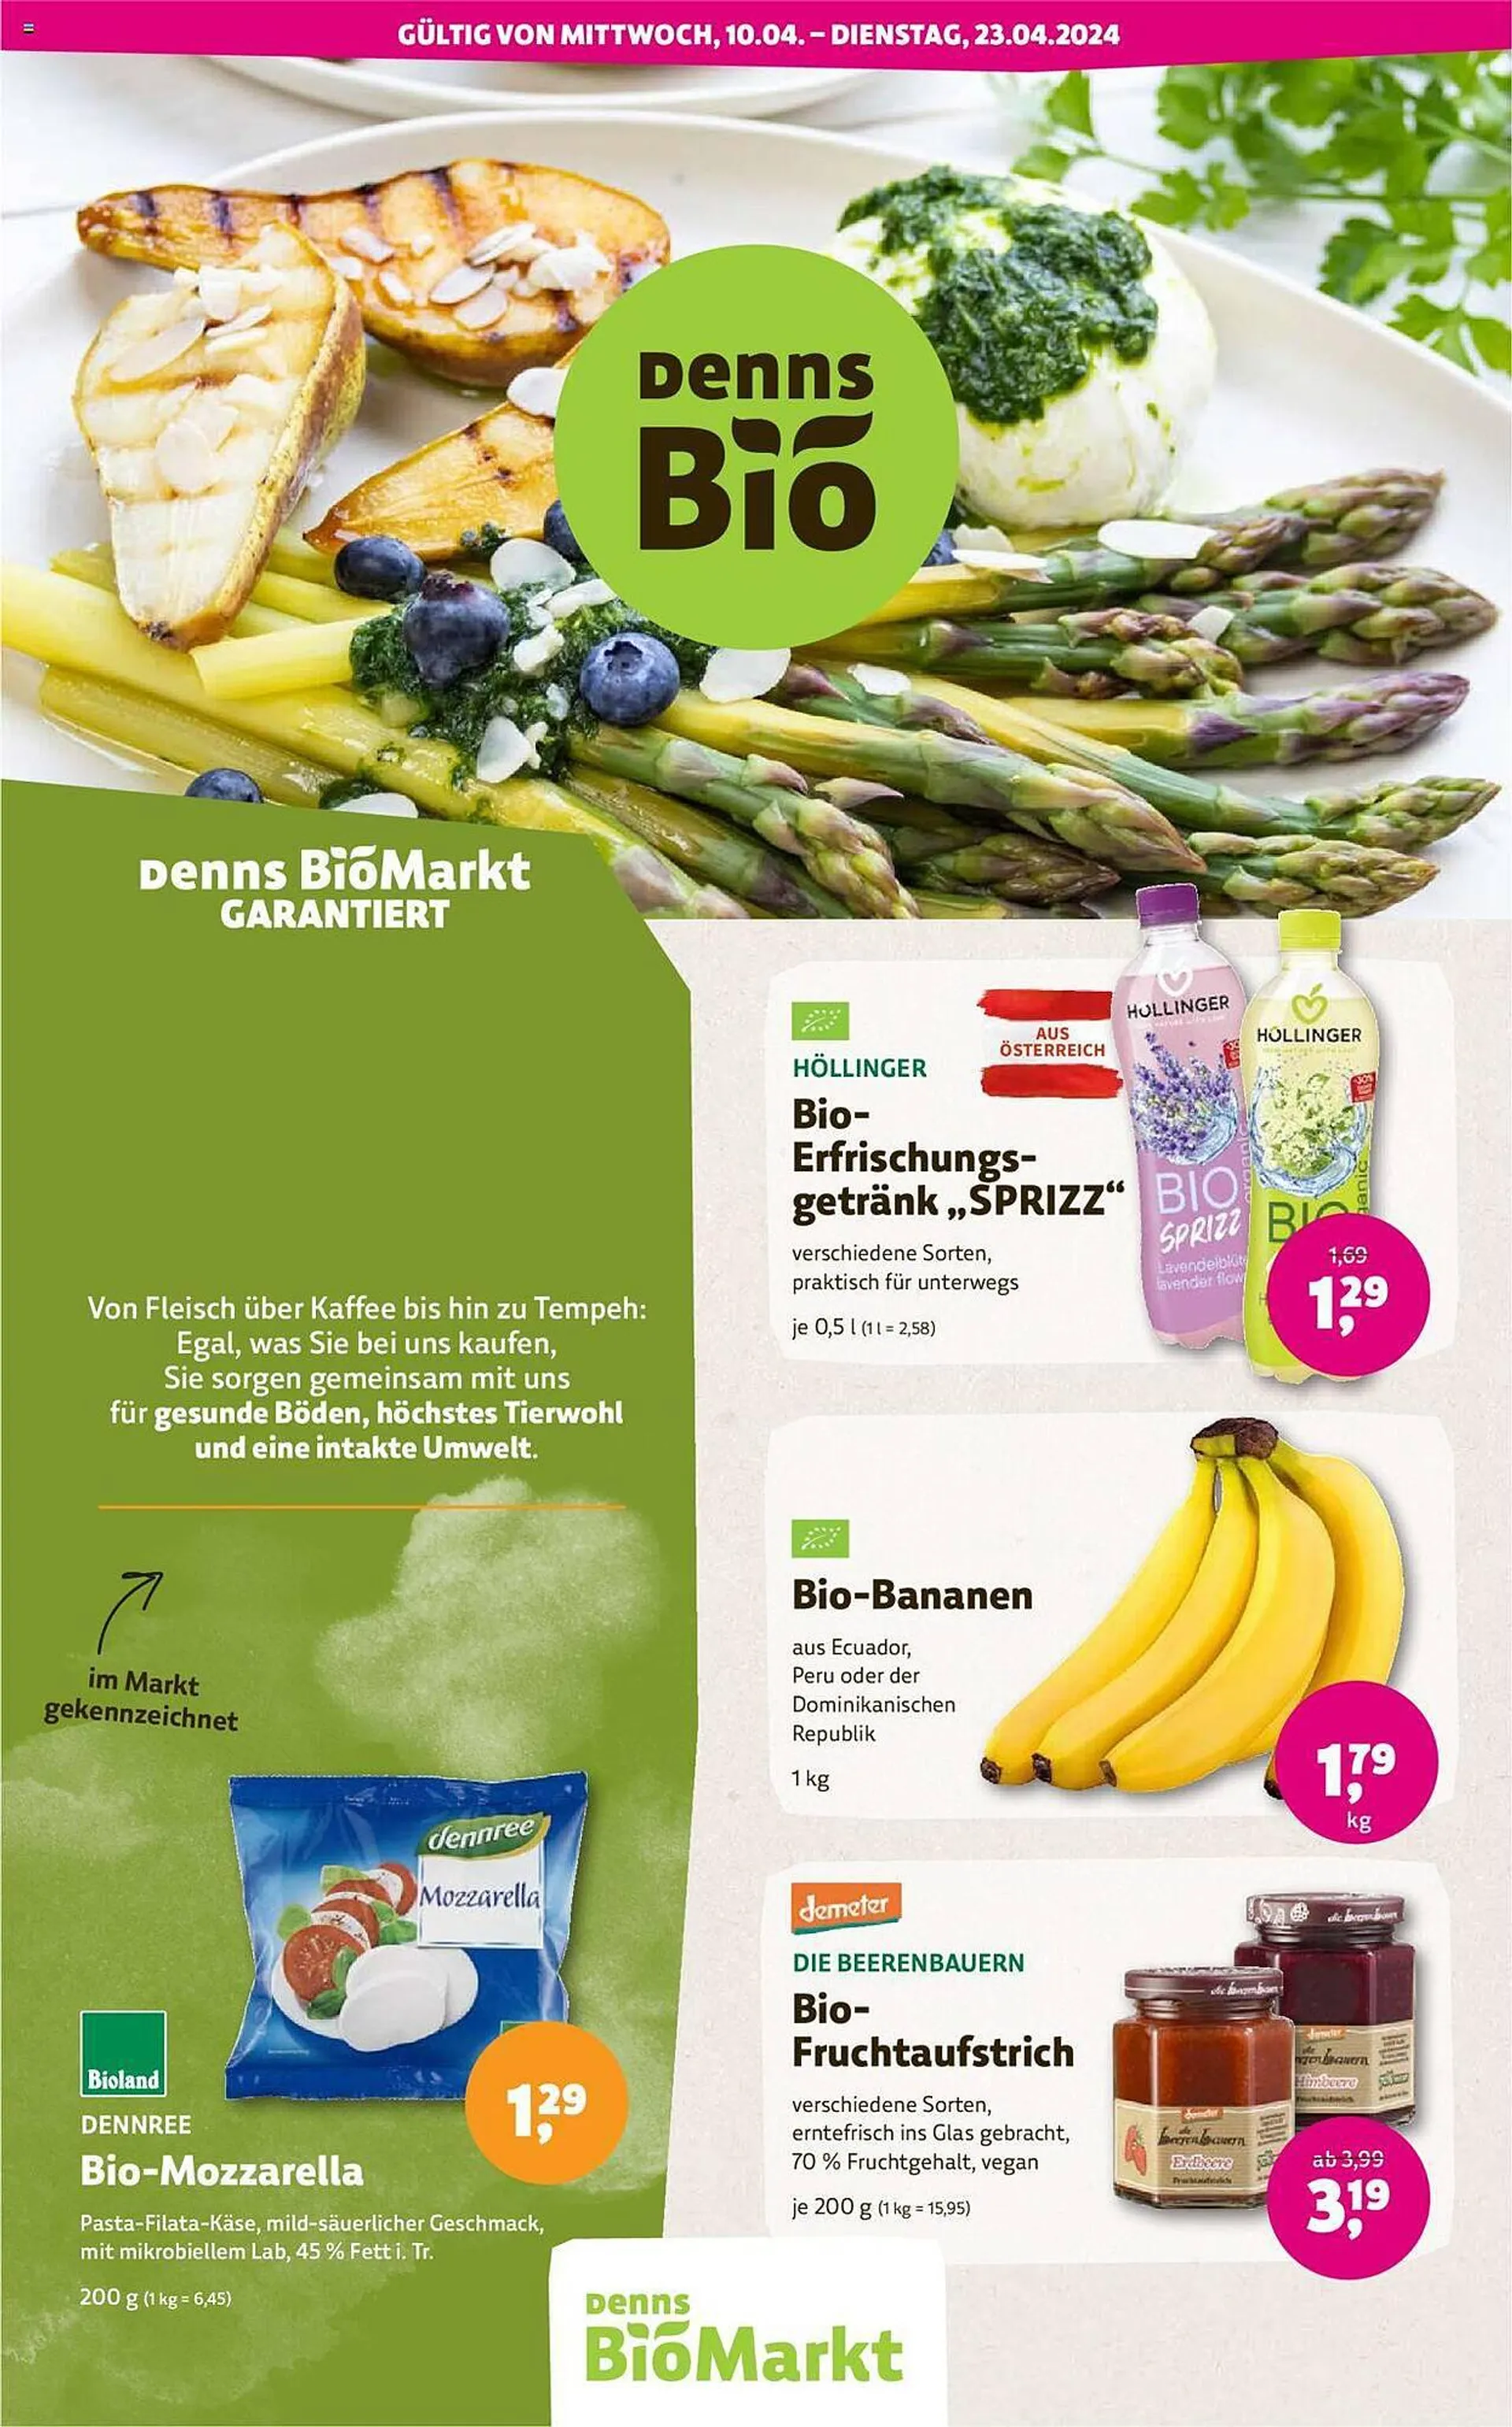 Denn's Biomarkt Flugblatt von 10. April bis 23. April 2024 - Flugblätt seite  1